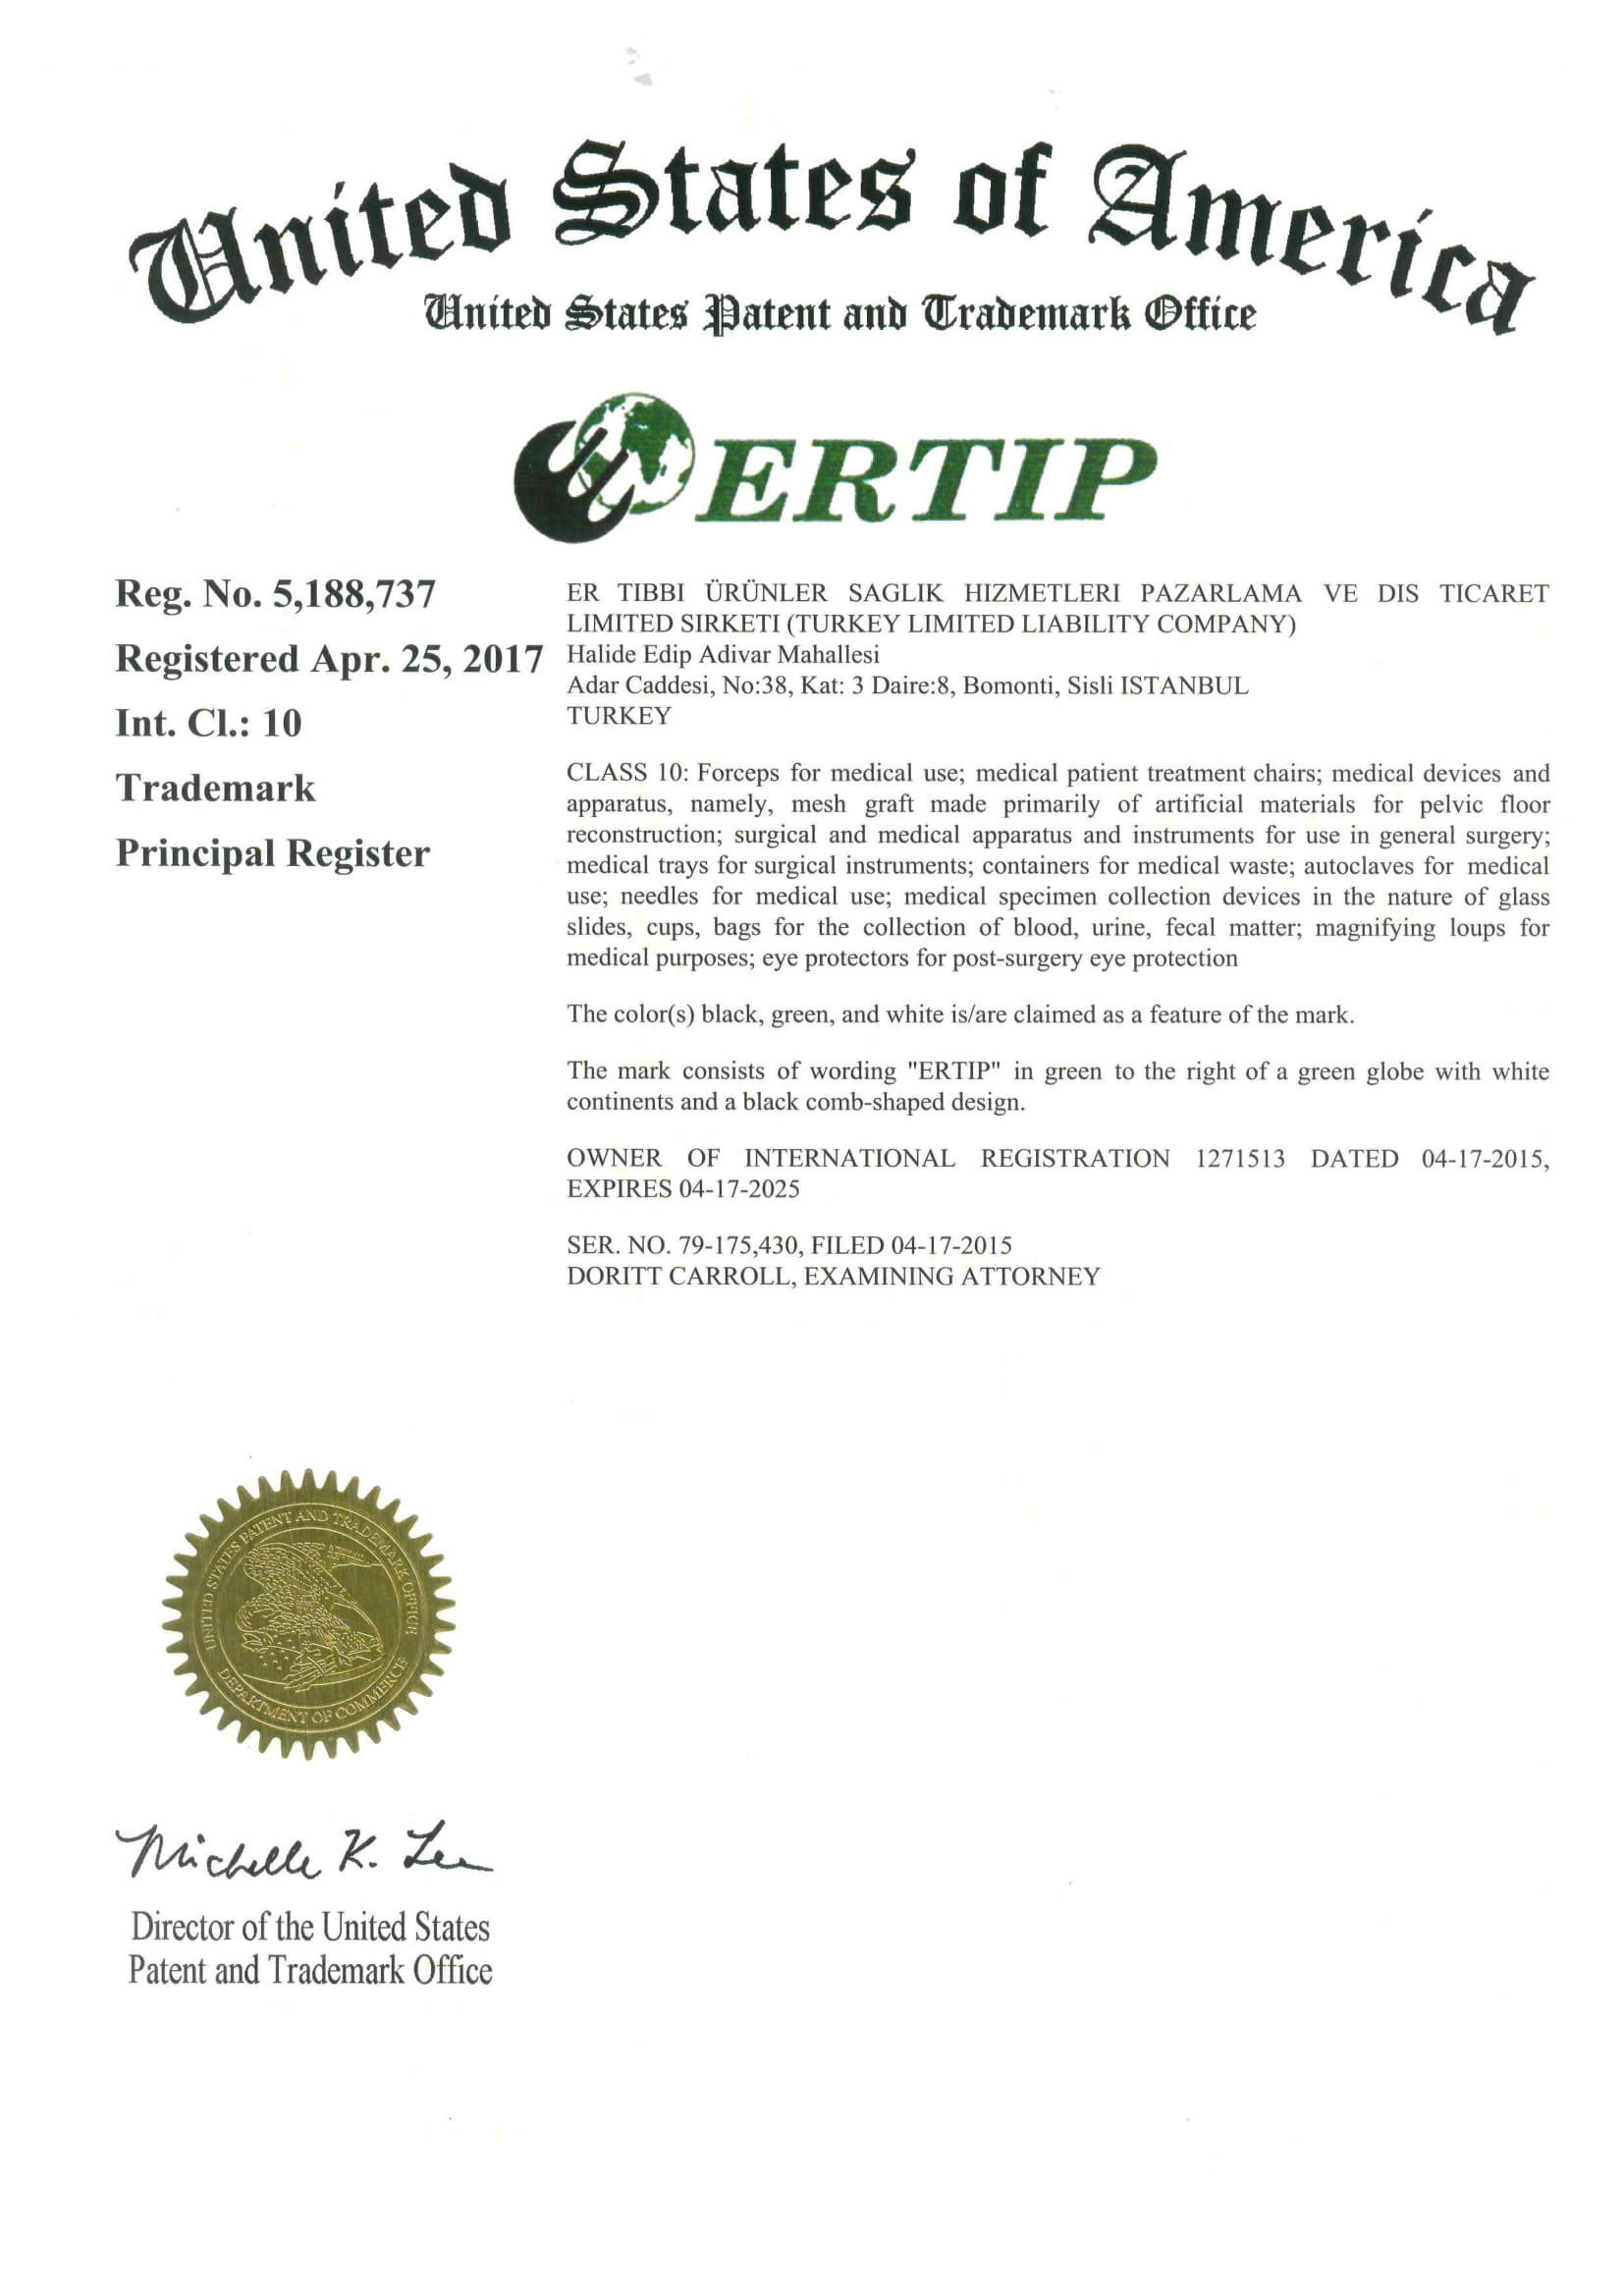 USA Trademark Registration Certificate